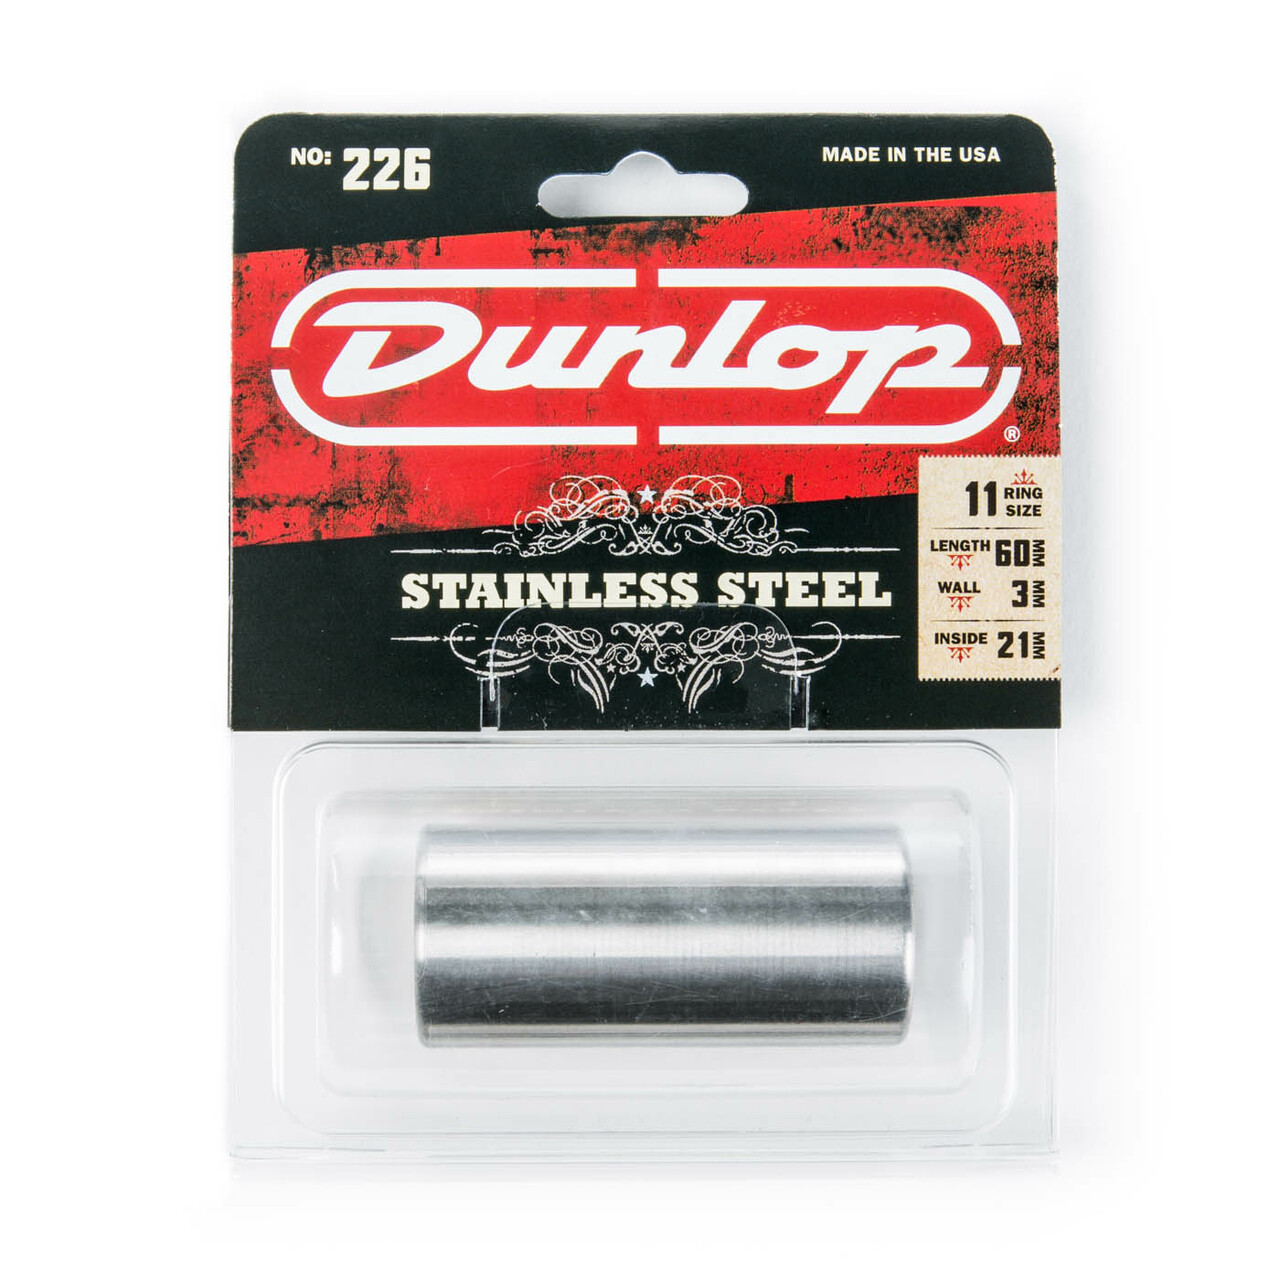 Dunlop 226 Slide Stainless Steel Large